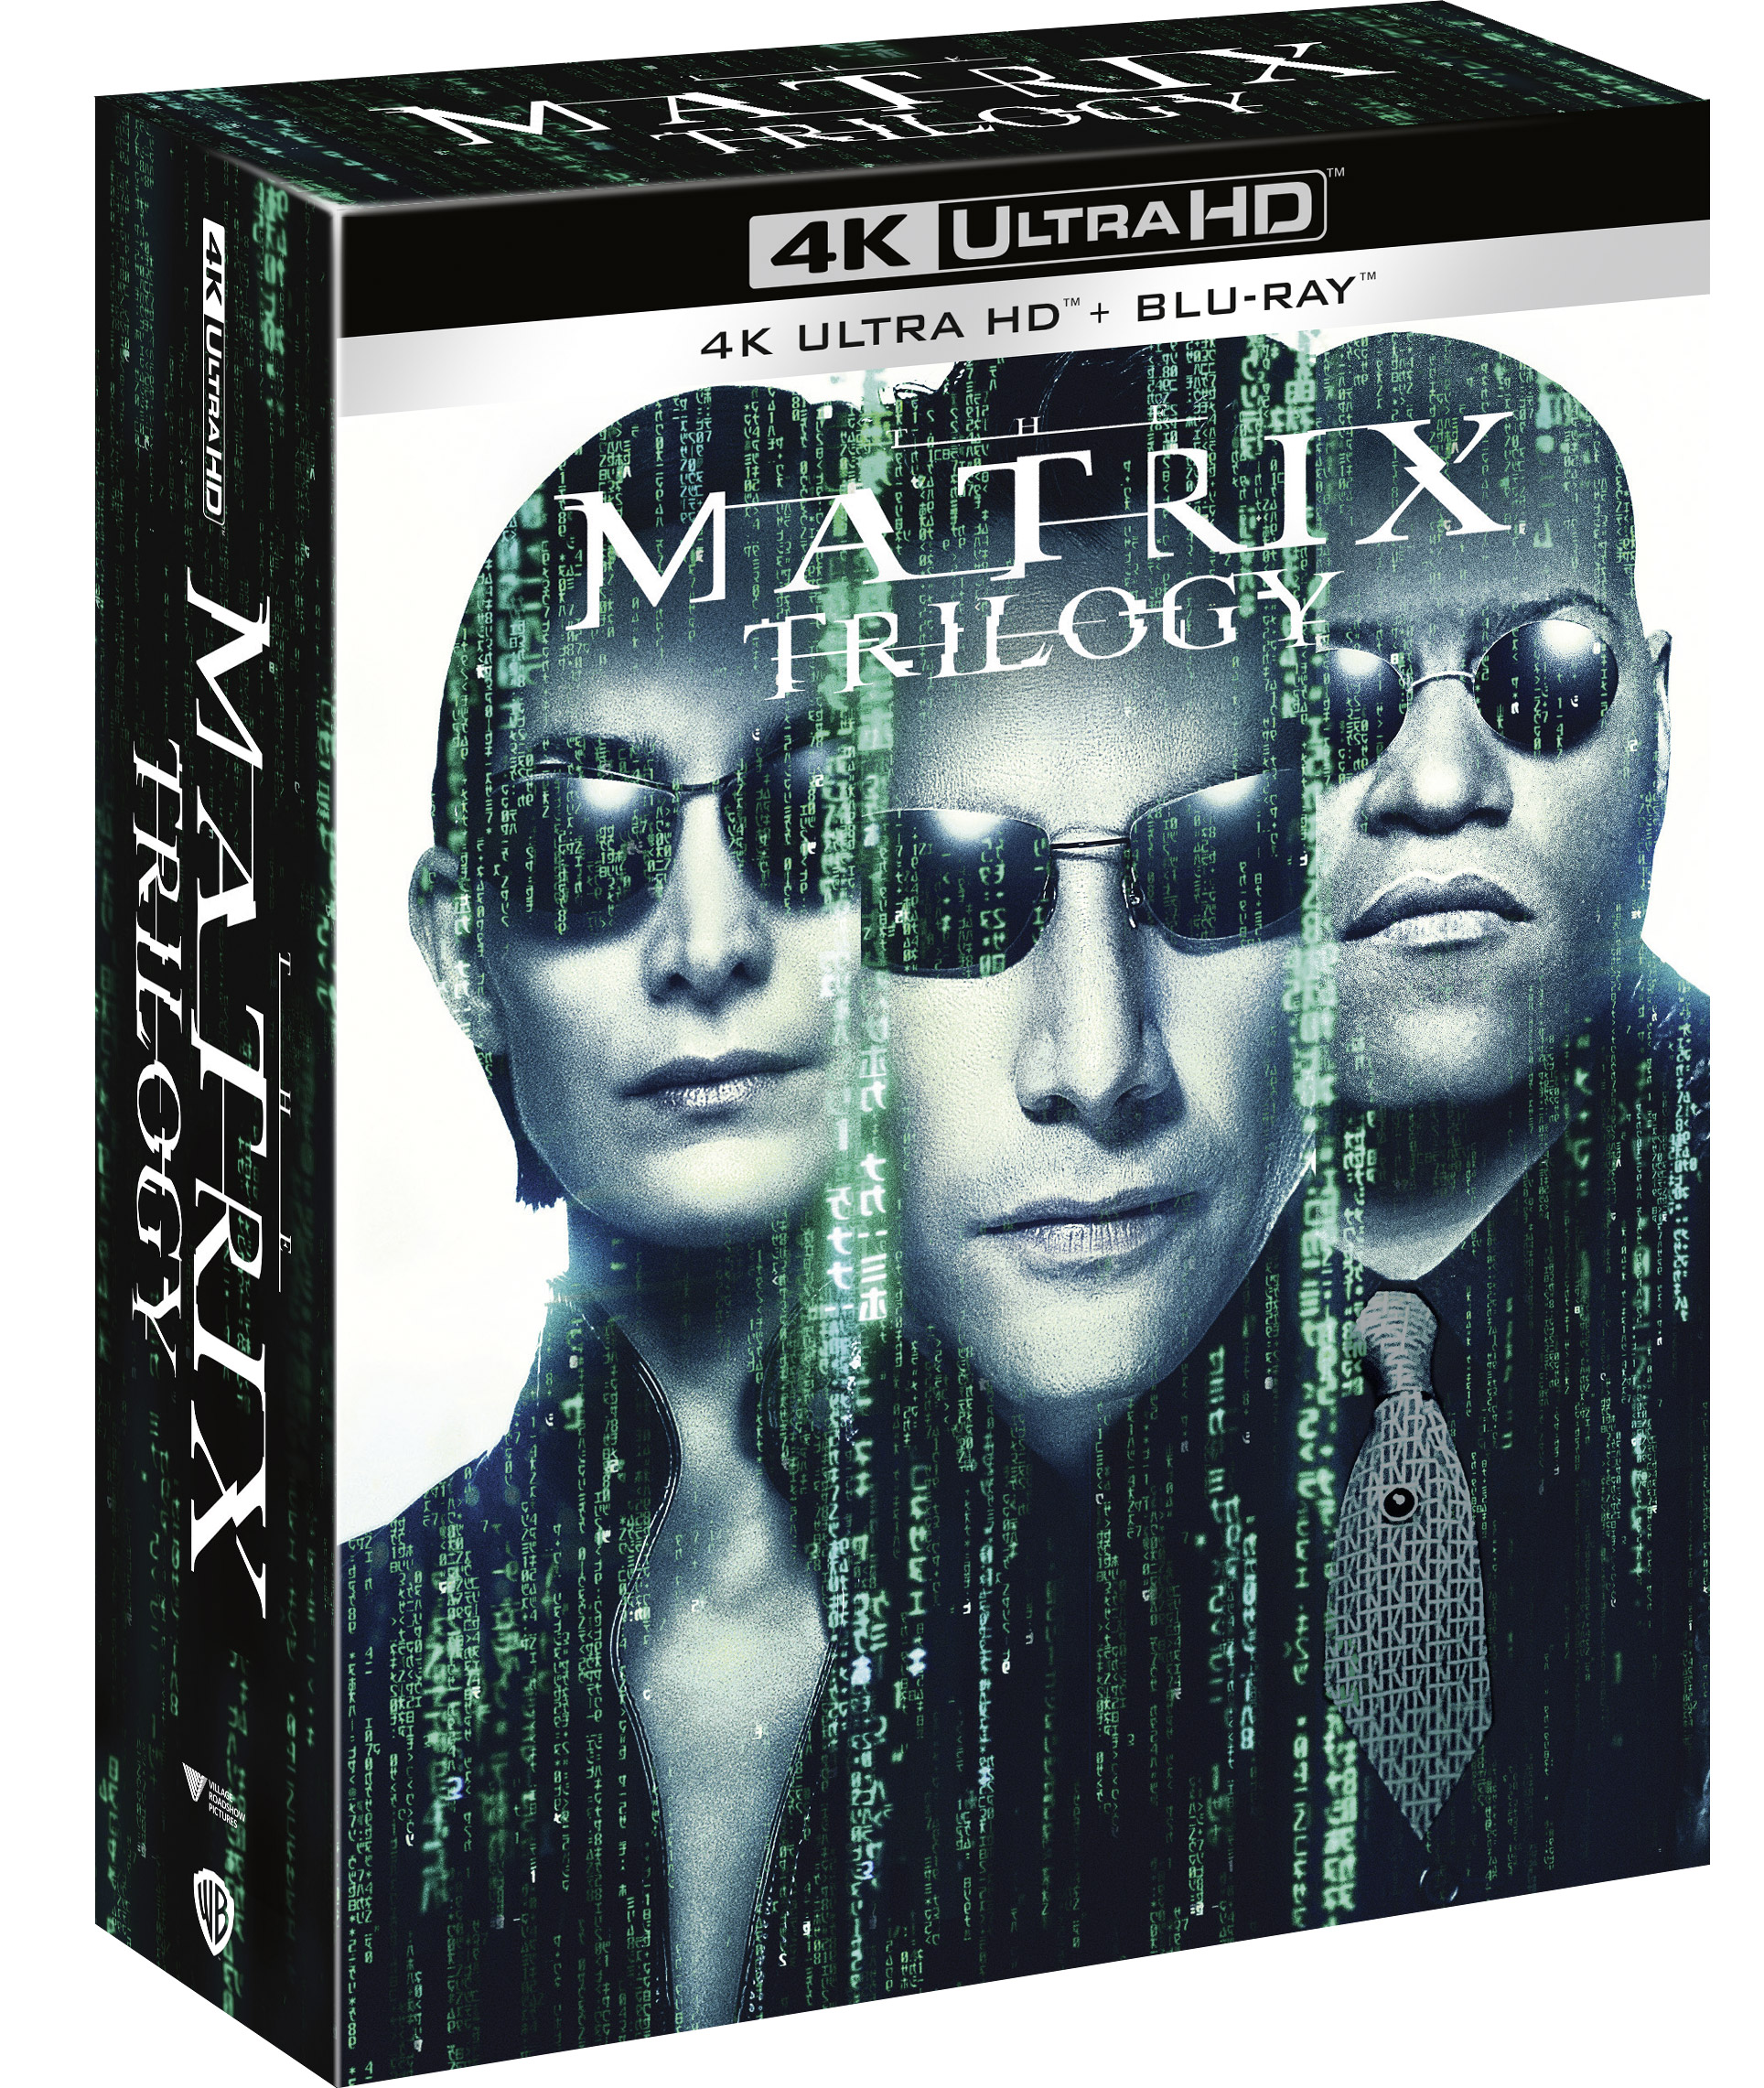 MATRIX TRILOGY Dal 17 novembre in 4K Ultra HD e Blu-ray